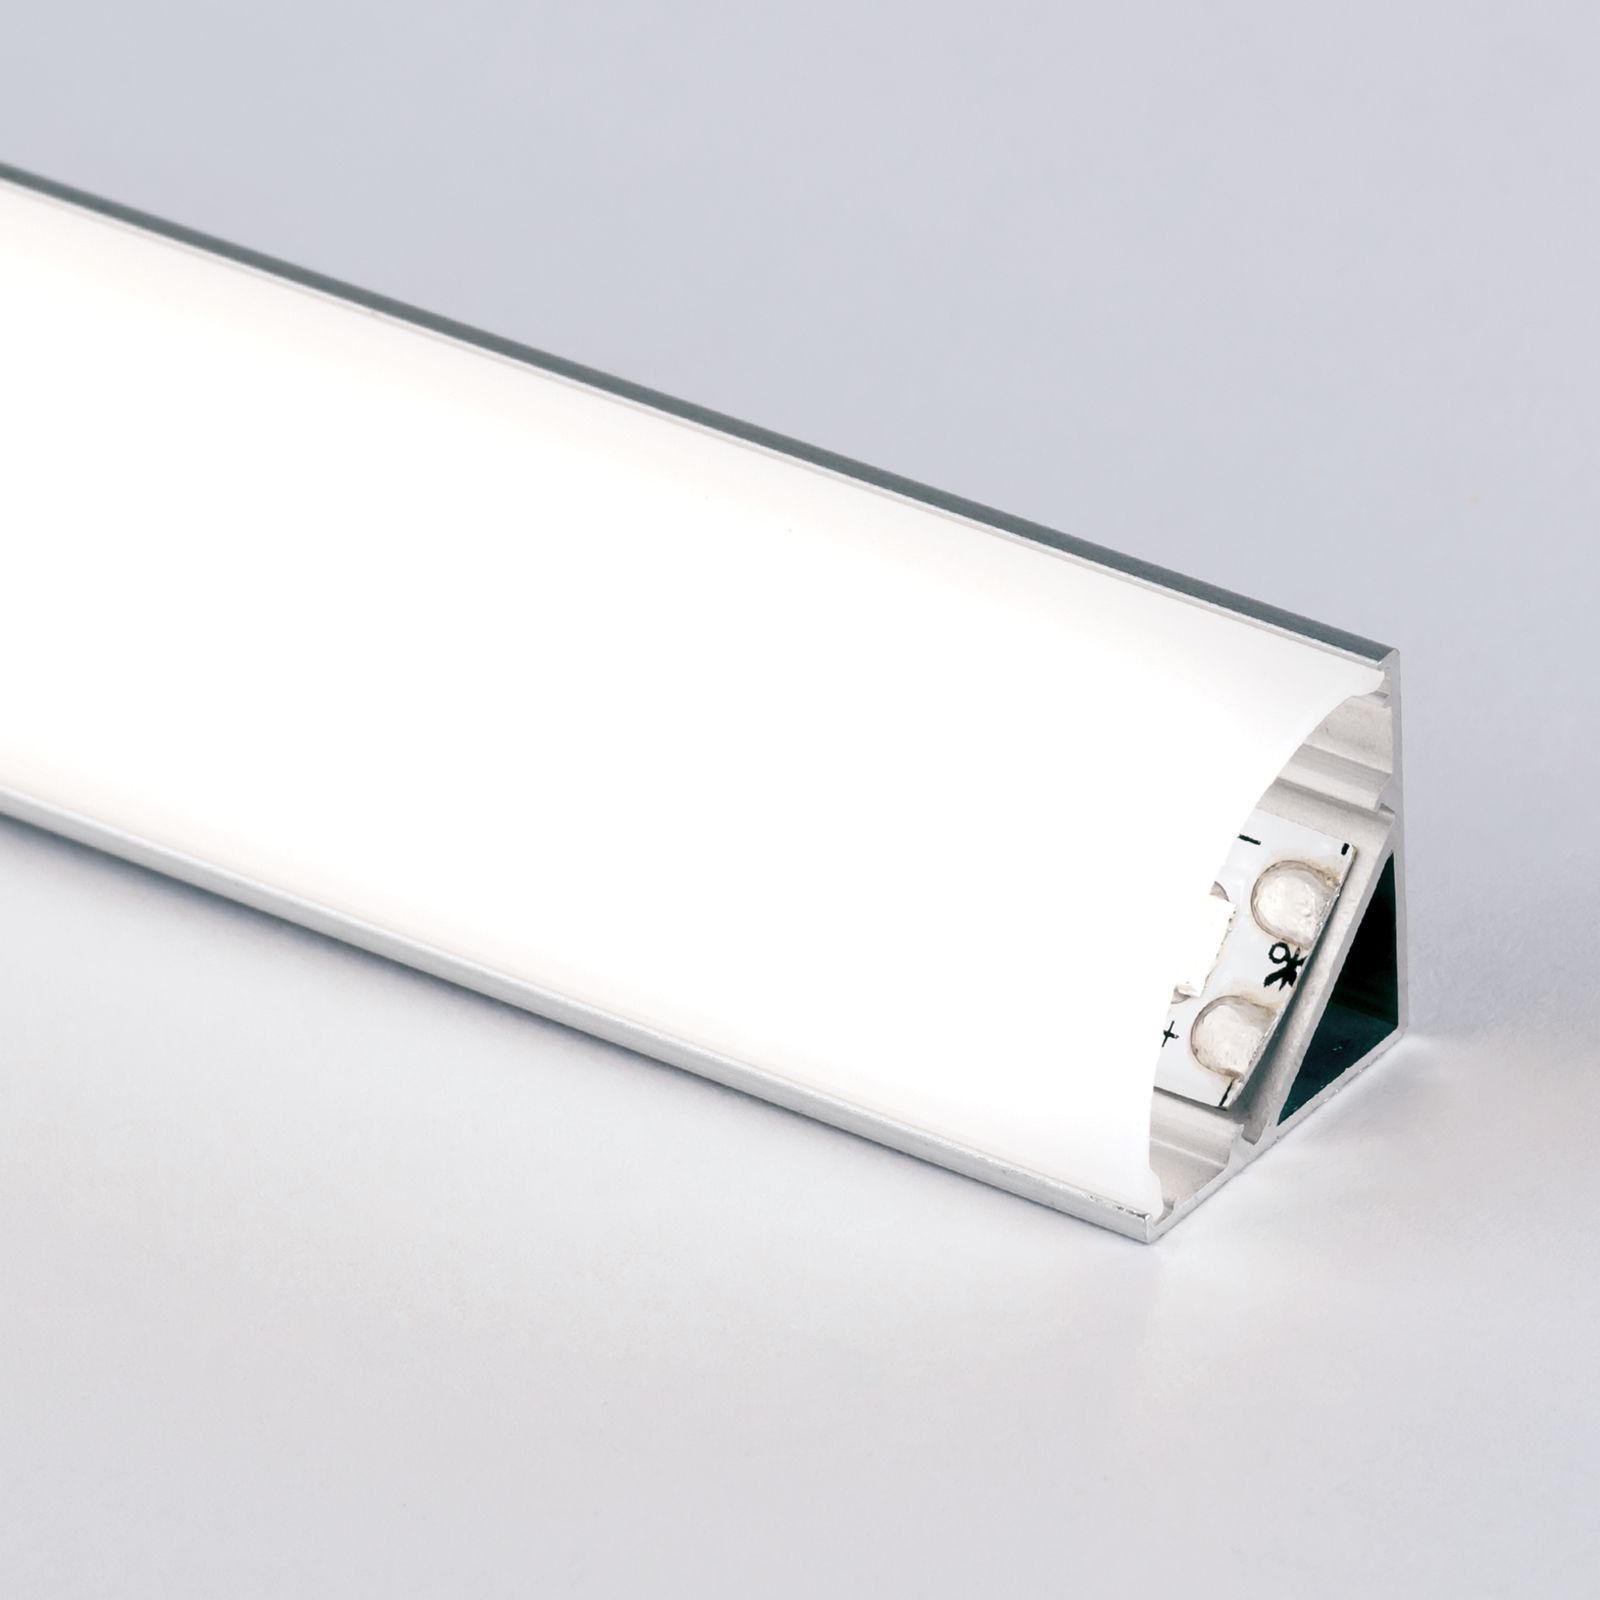 Perfíl Aluminio para Tira LED Difusor Opal 1M WR-2212 x 1M